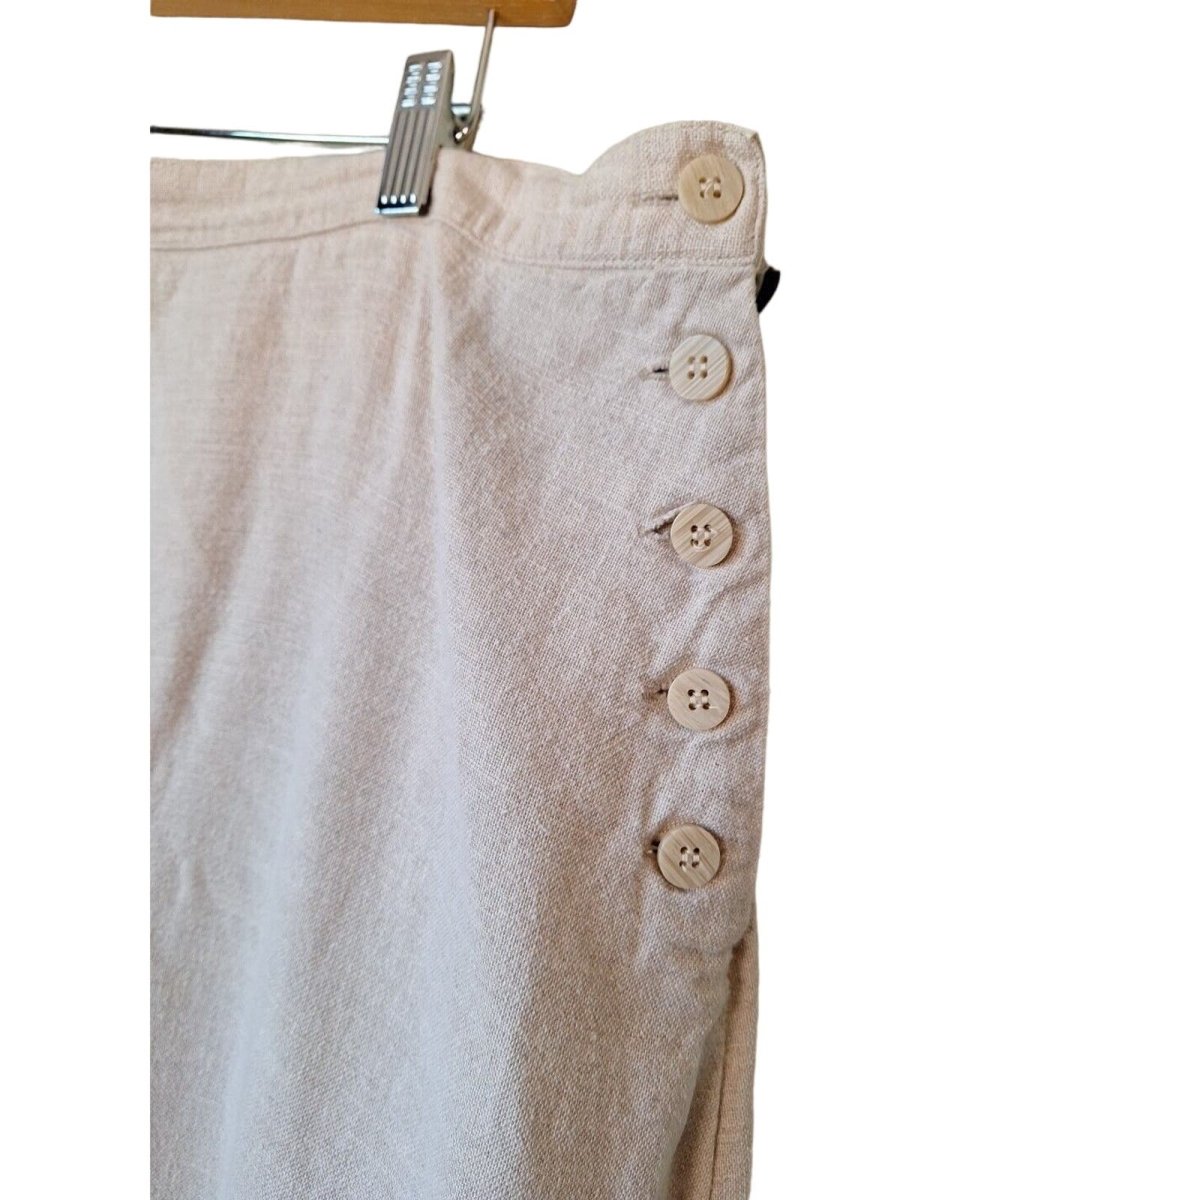 Vintage 90s Beige Linen/Cotton A Line Midi Skirt Women Size 18 - themallvintage The Mall Vintage